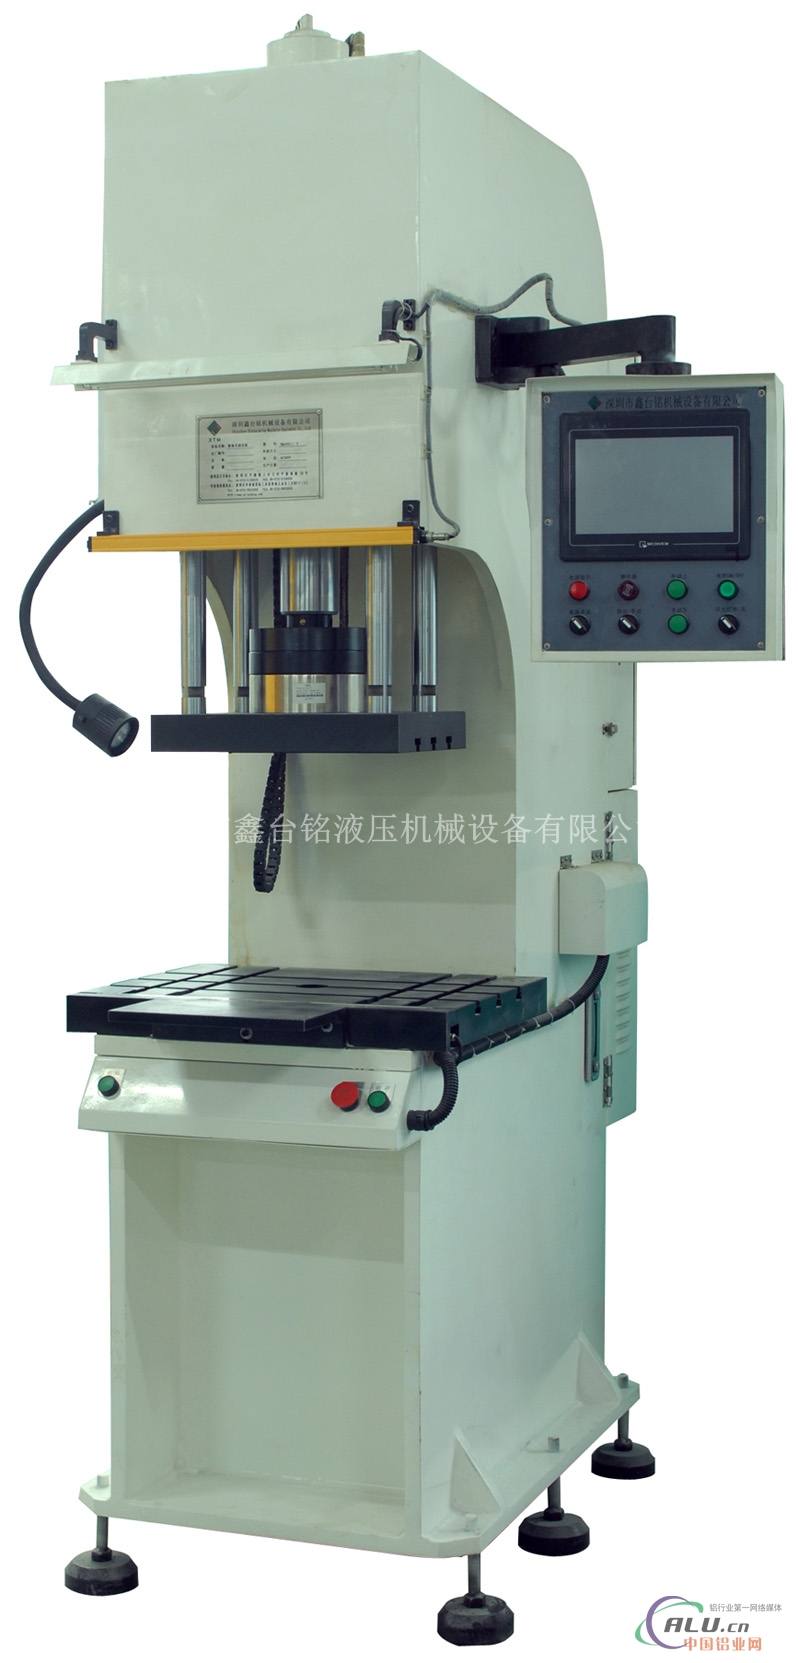 CNC bearing press mounting machine, Shanghai NC copper sleeve press